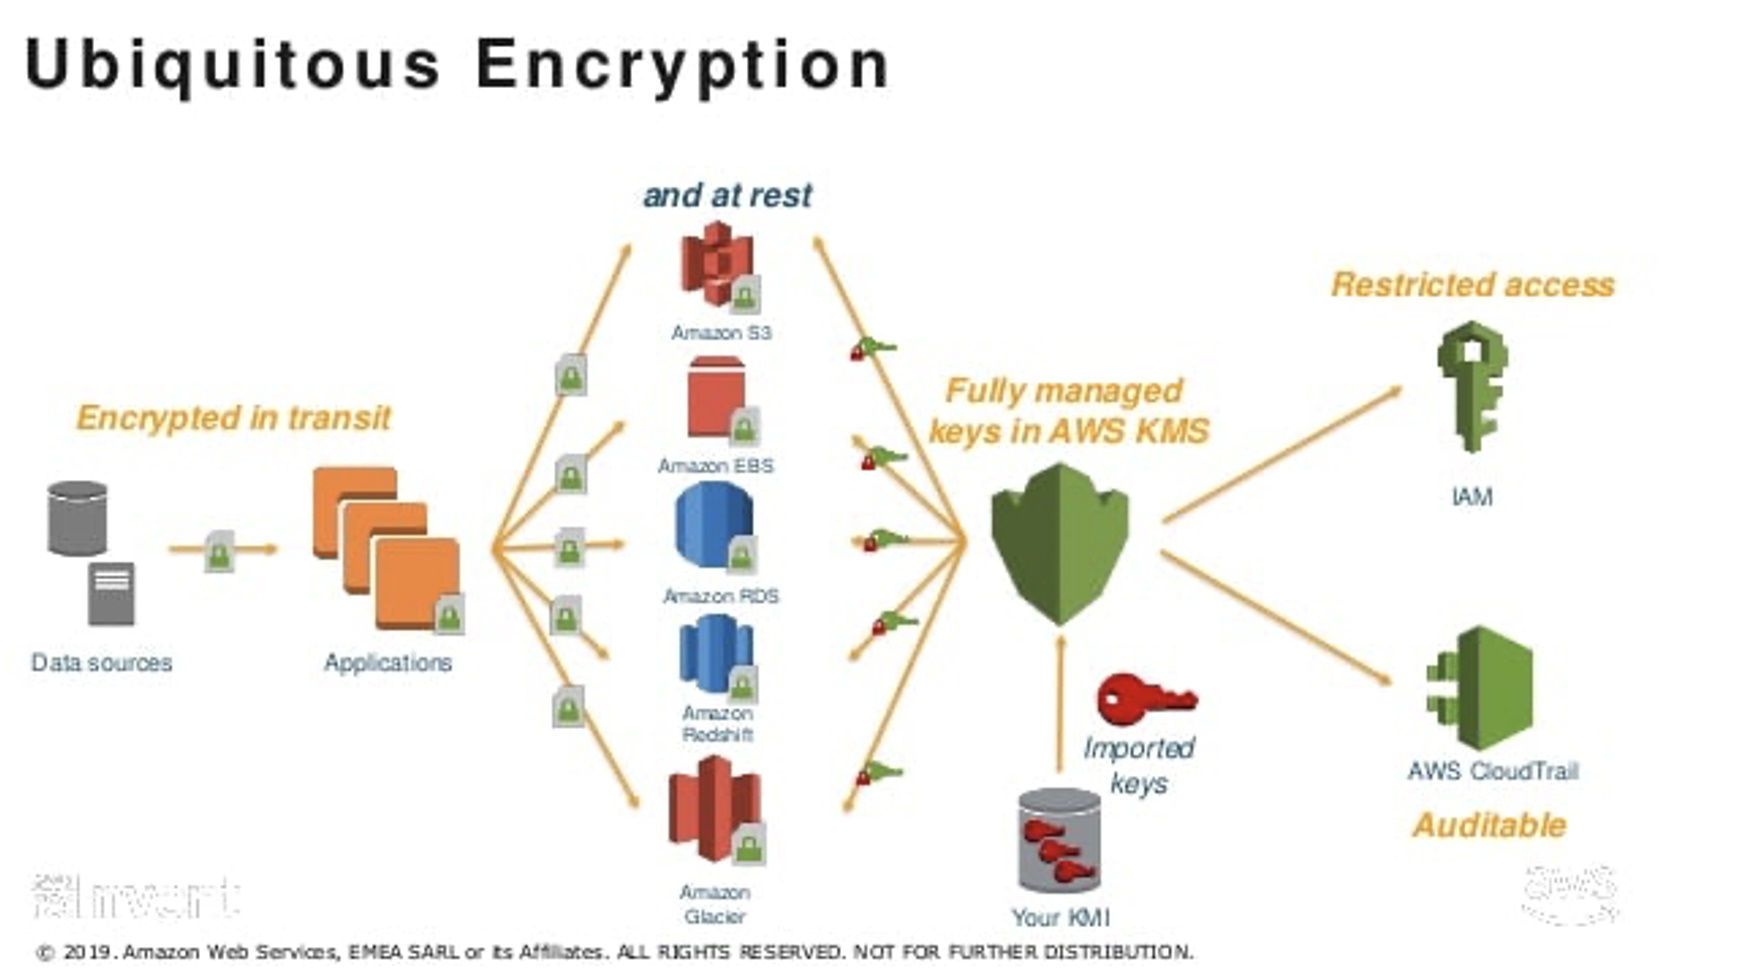 Ubiquitous Encryption | Encryption keys and application secrets in the cloud | ORBIT Cloud Encyclopedia